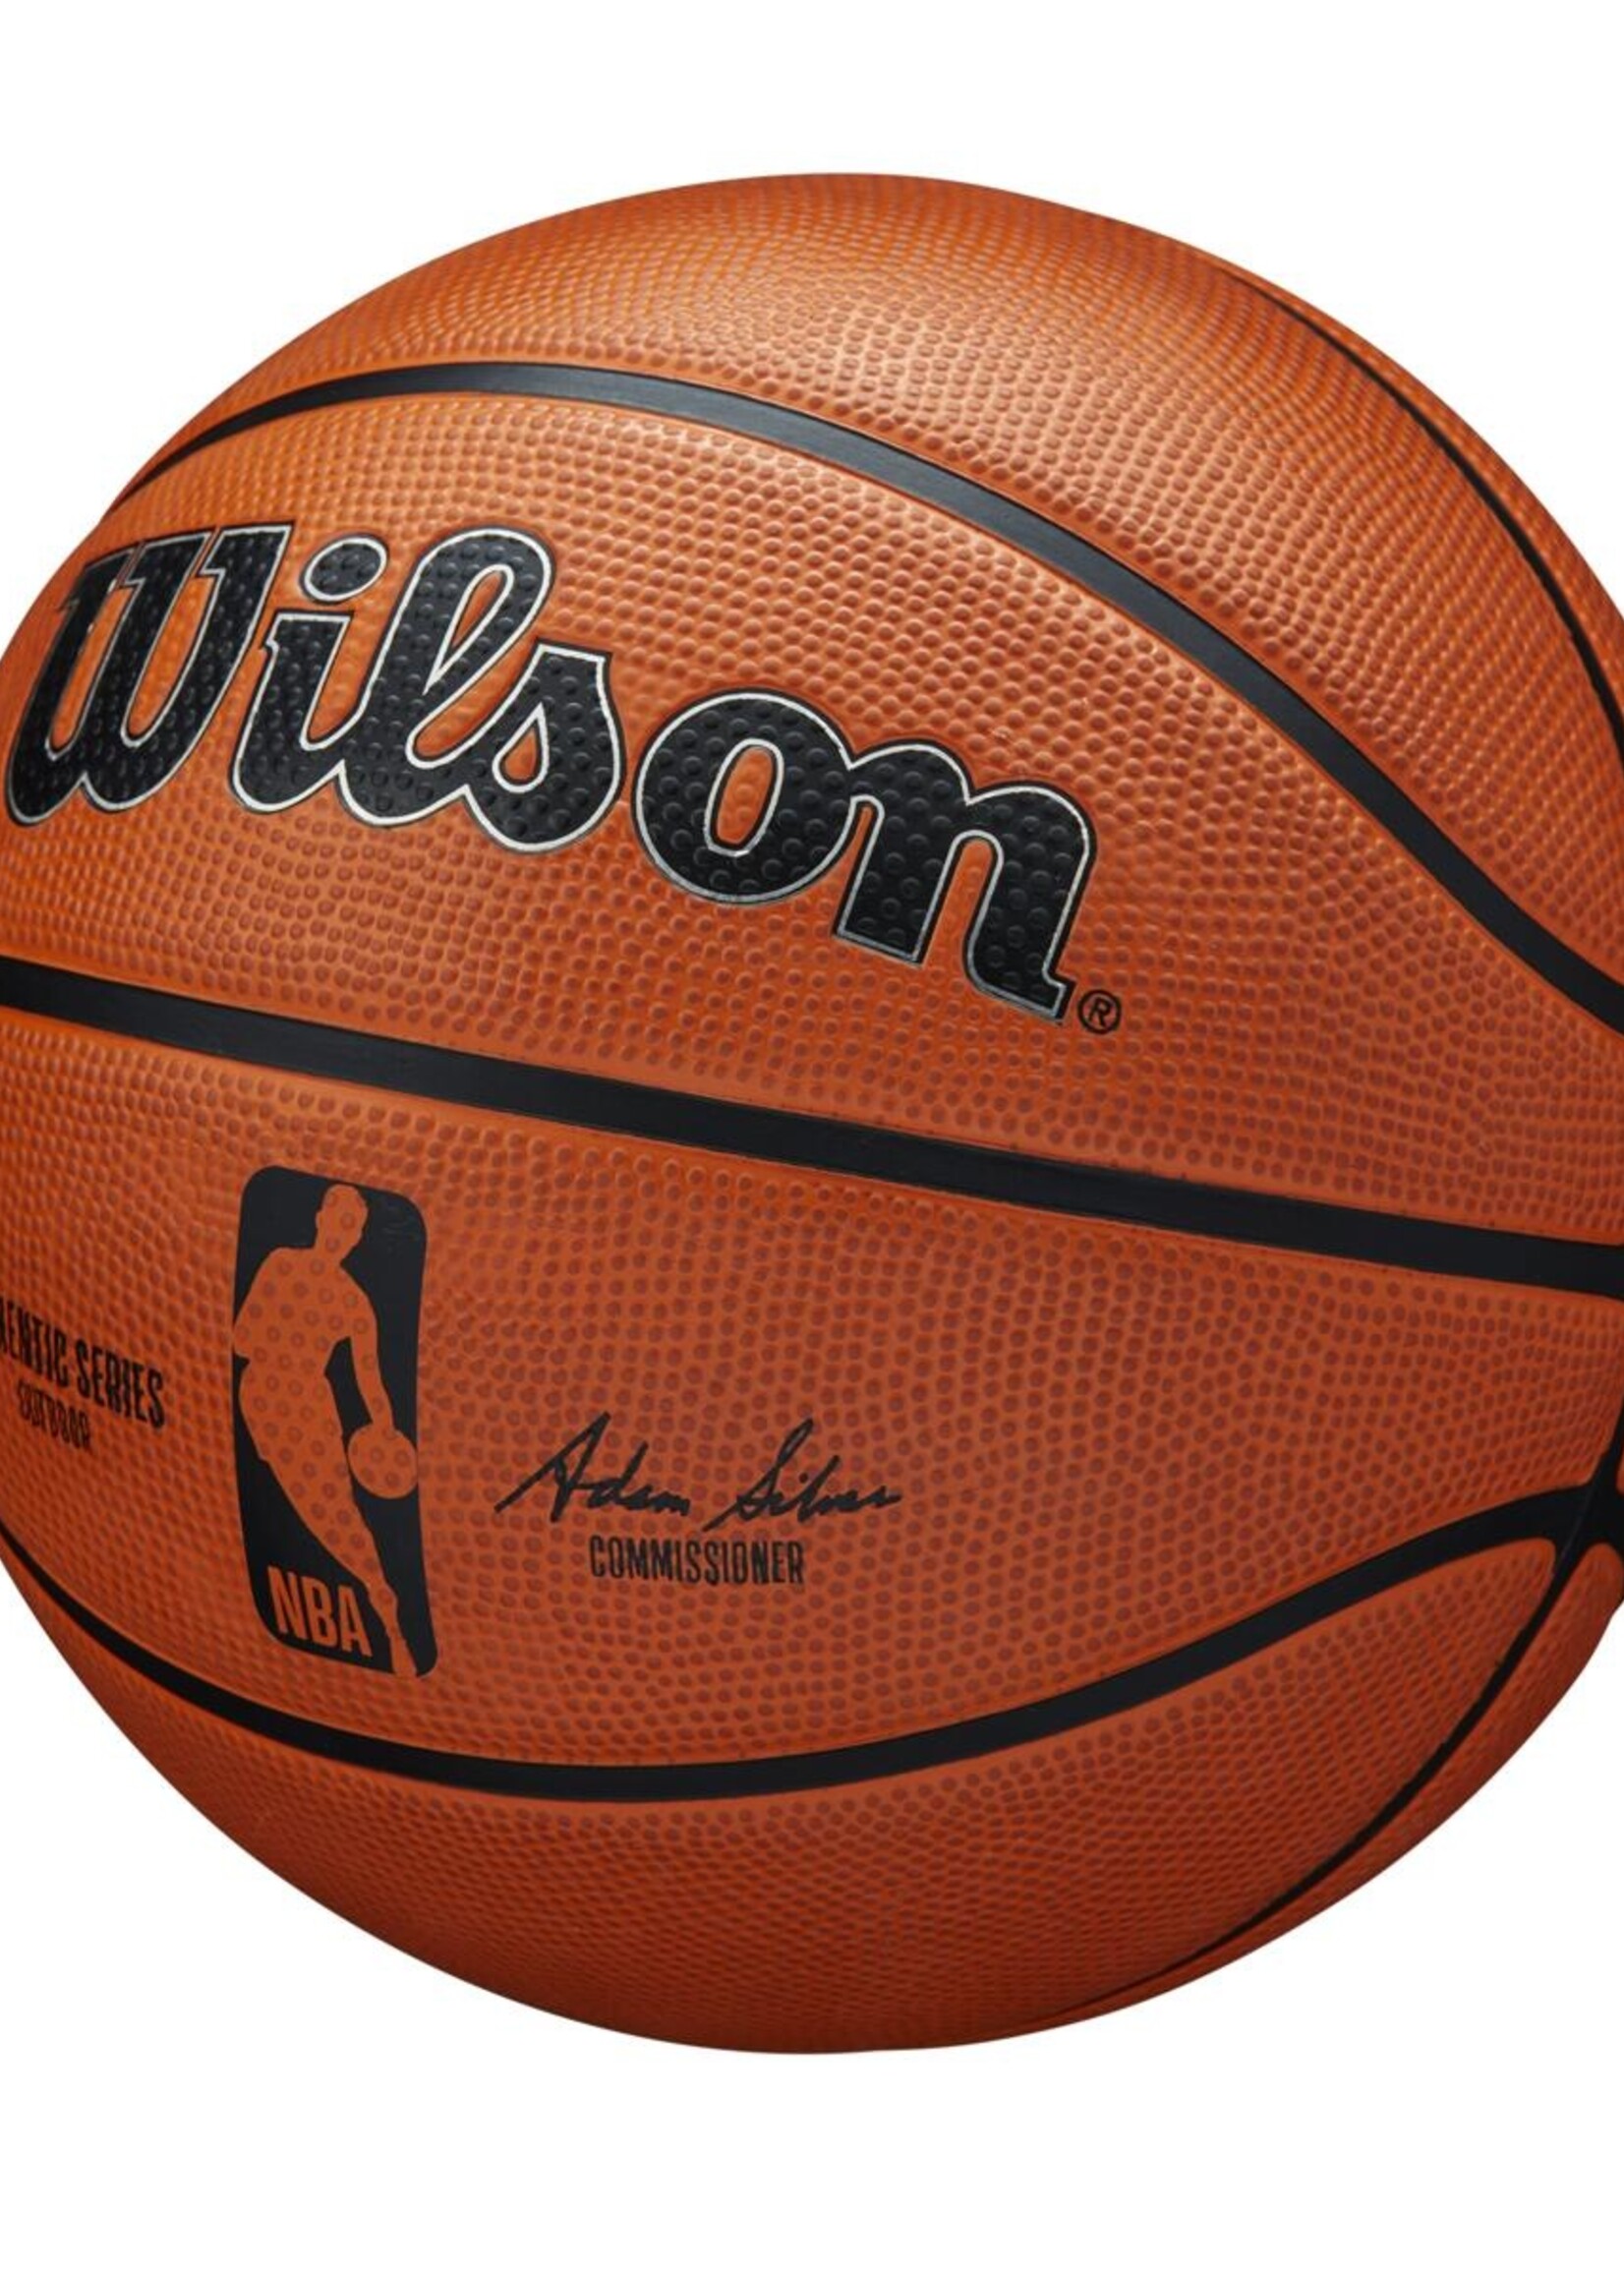 Wilson NBA Authentic Series Outdoor Basketbal (7)